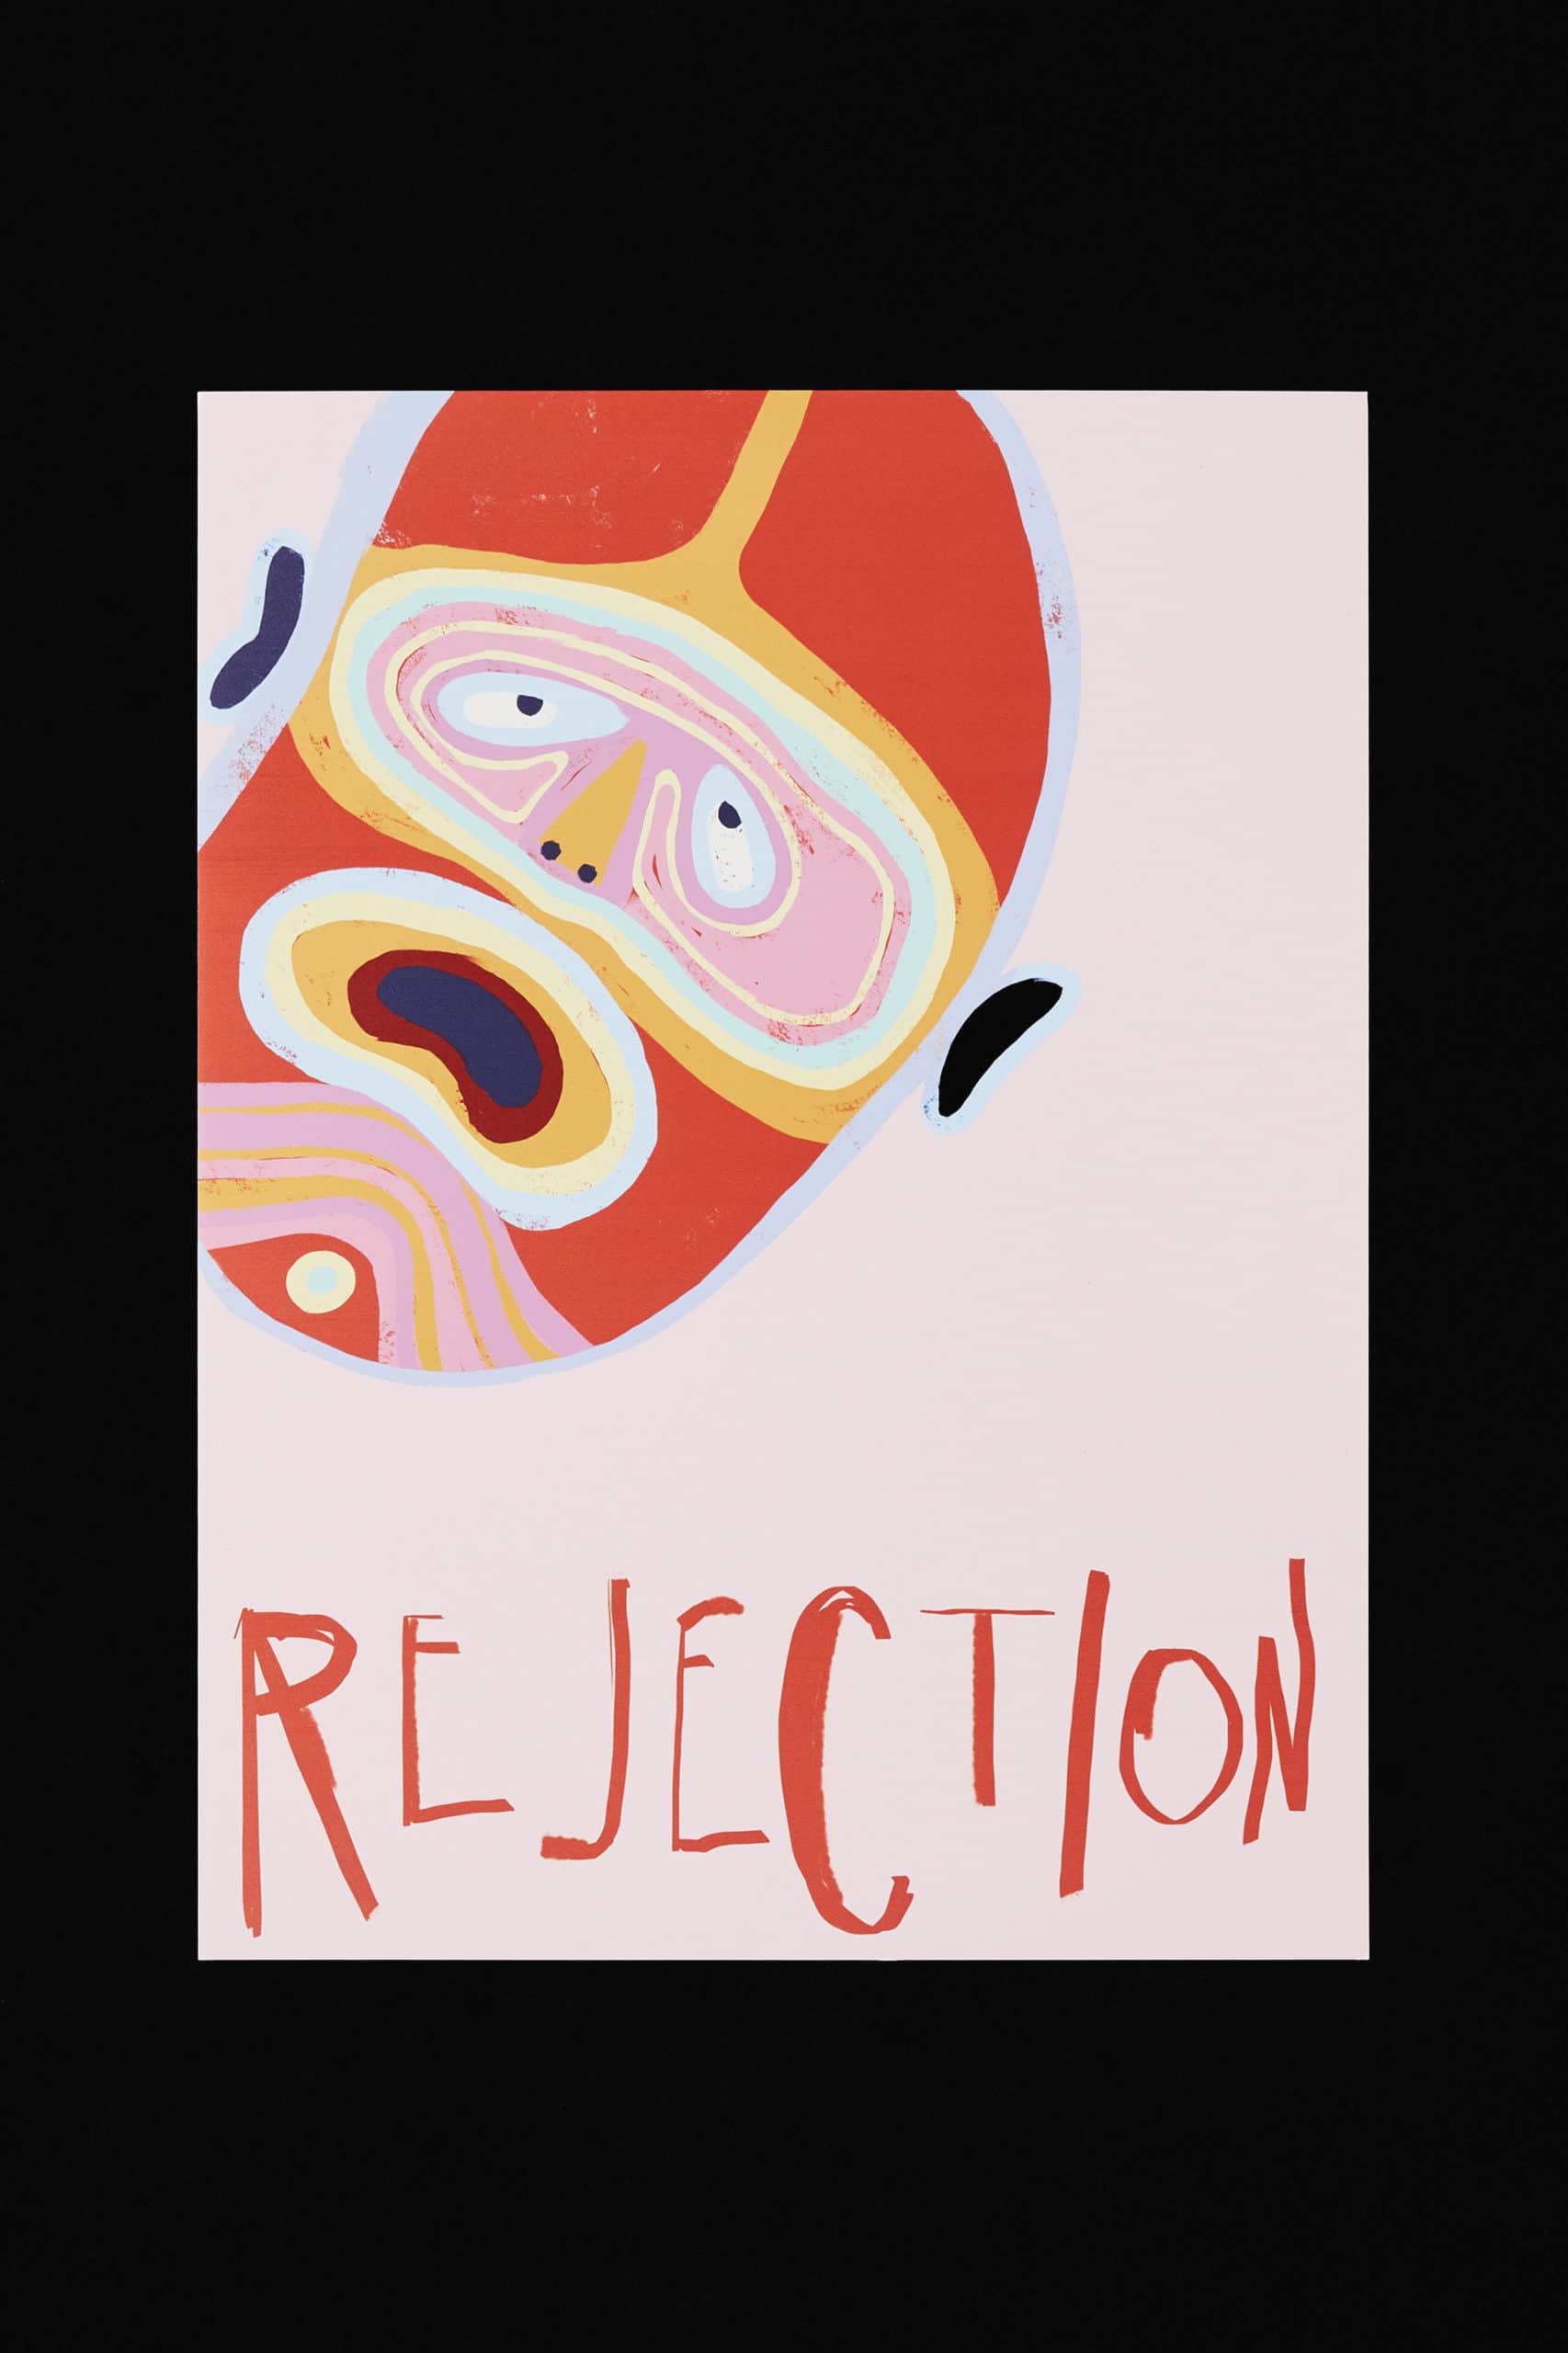 DesignWeek_Rejection_Vertical